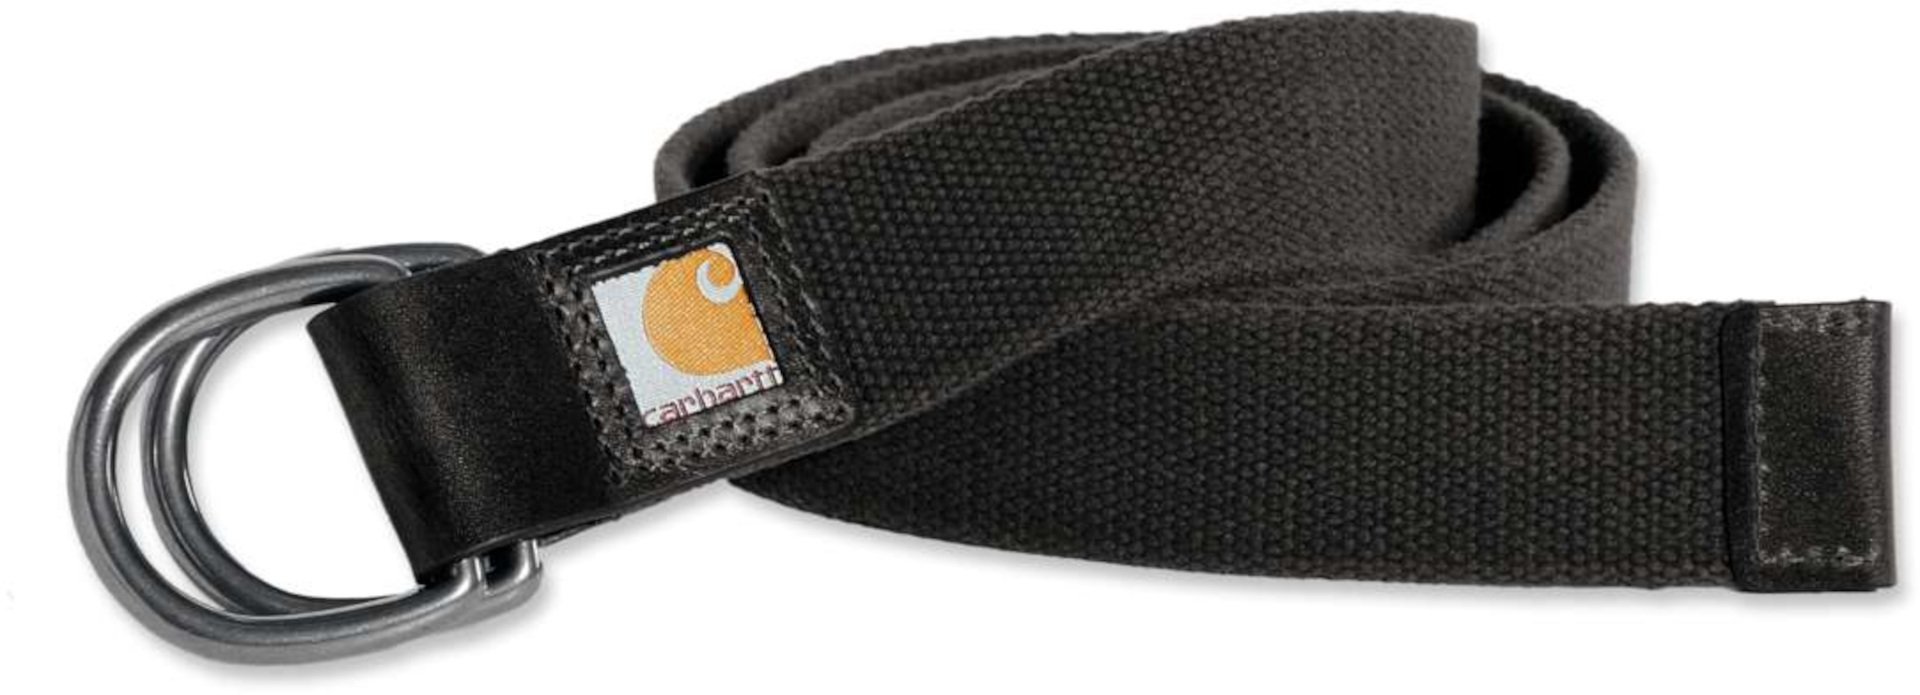 Image of Carhartt Webbing Cintura Donna, nero, dimensione XL per donne